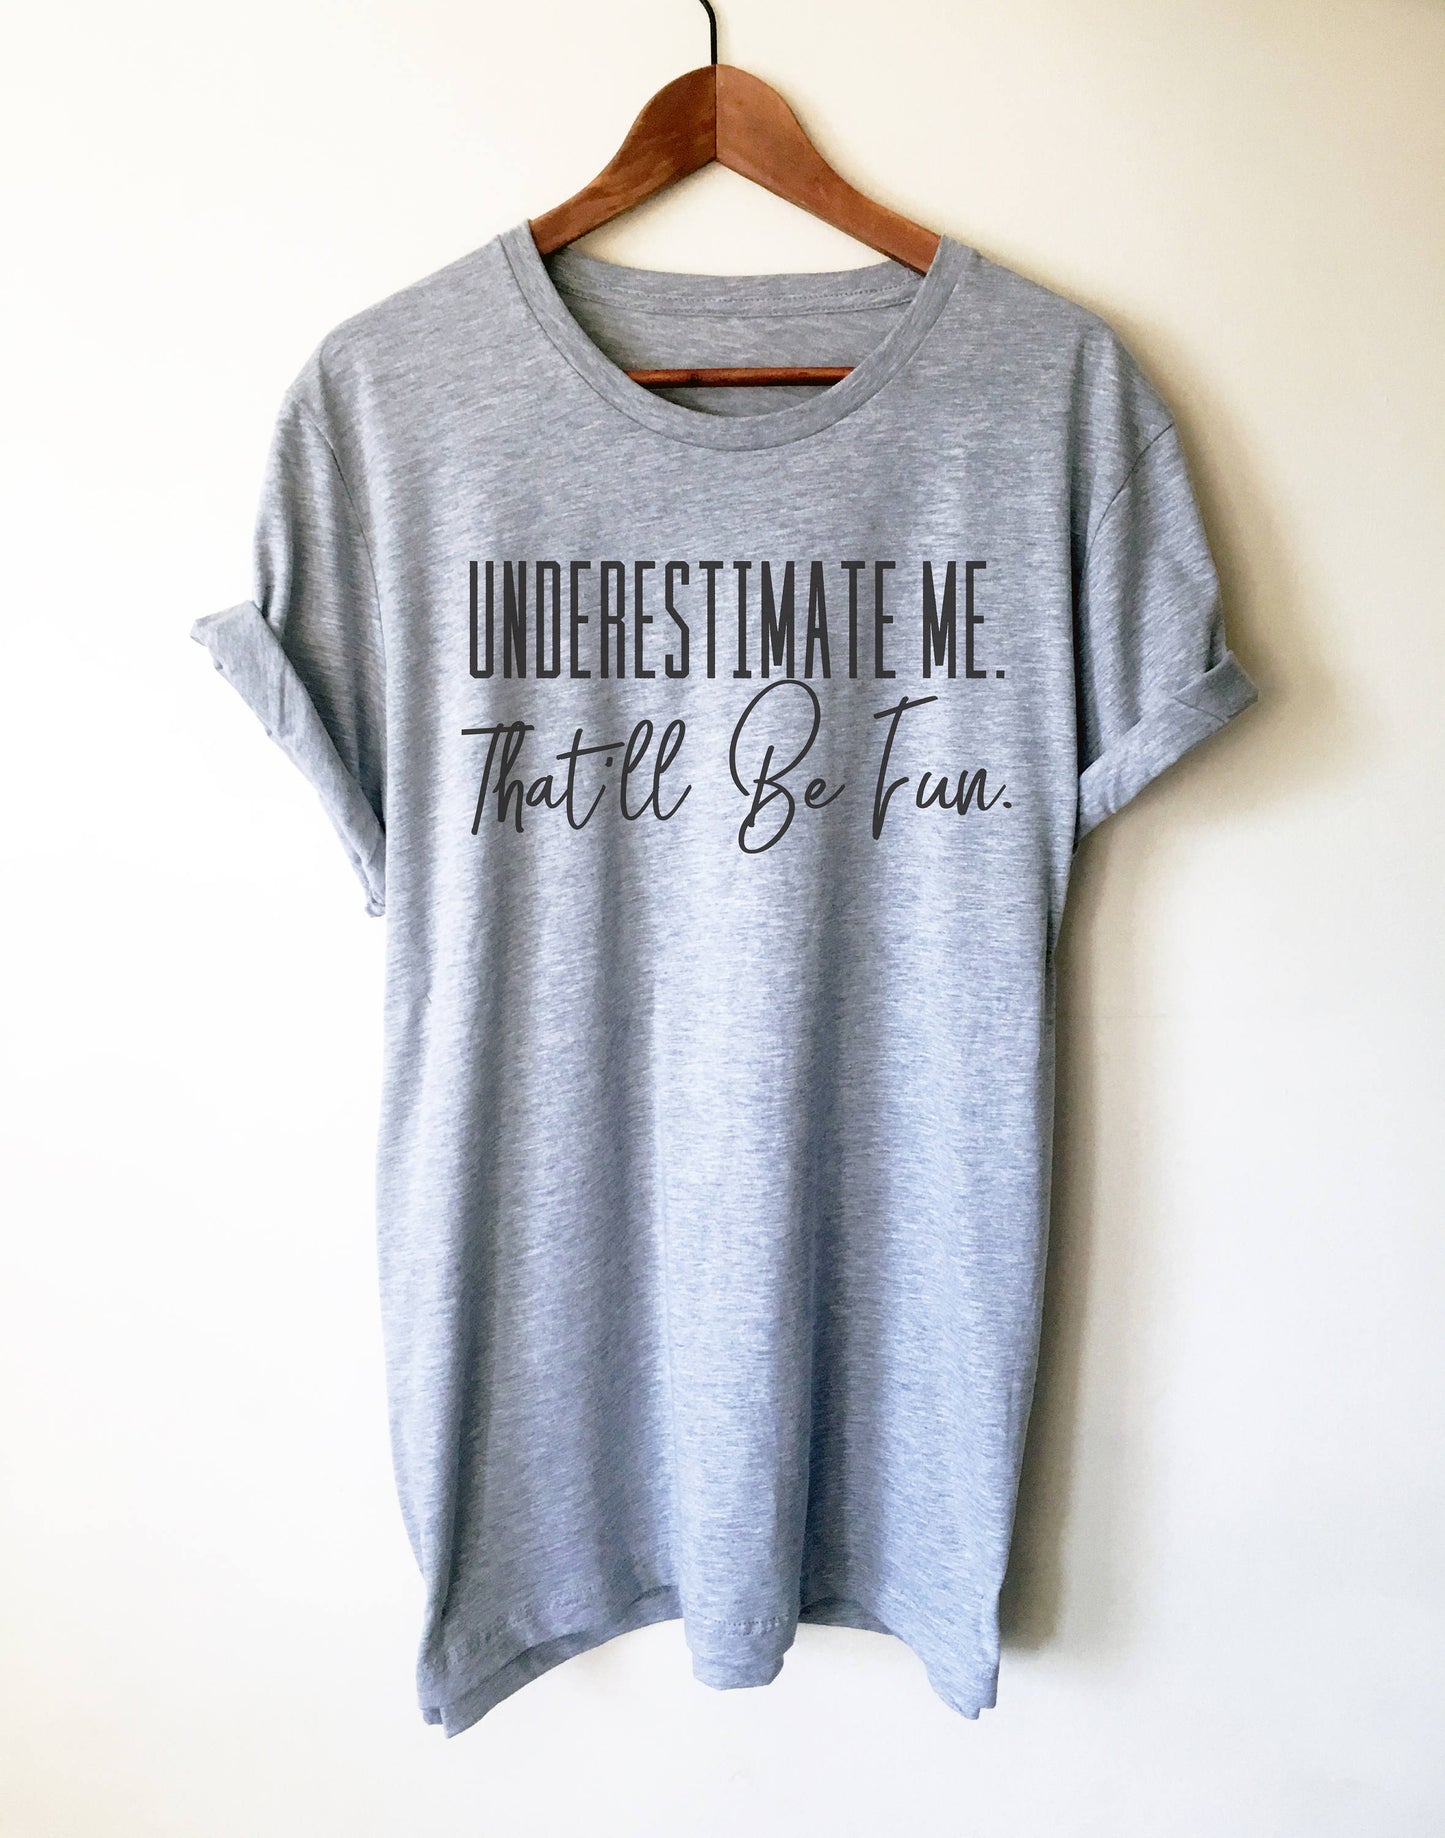 Underestimate Me. That'll Be Fun Unisex Shirt - Workout shirt, Motivation t shirts, Feminist shirt, Fitness goals, Sarcastic tee